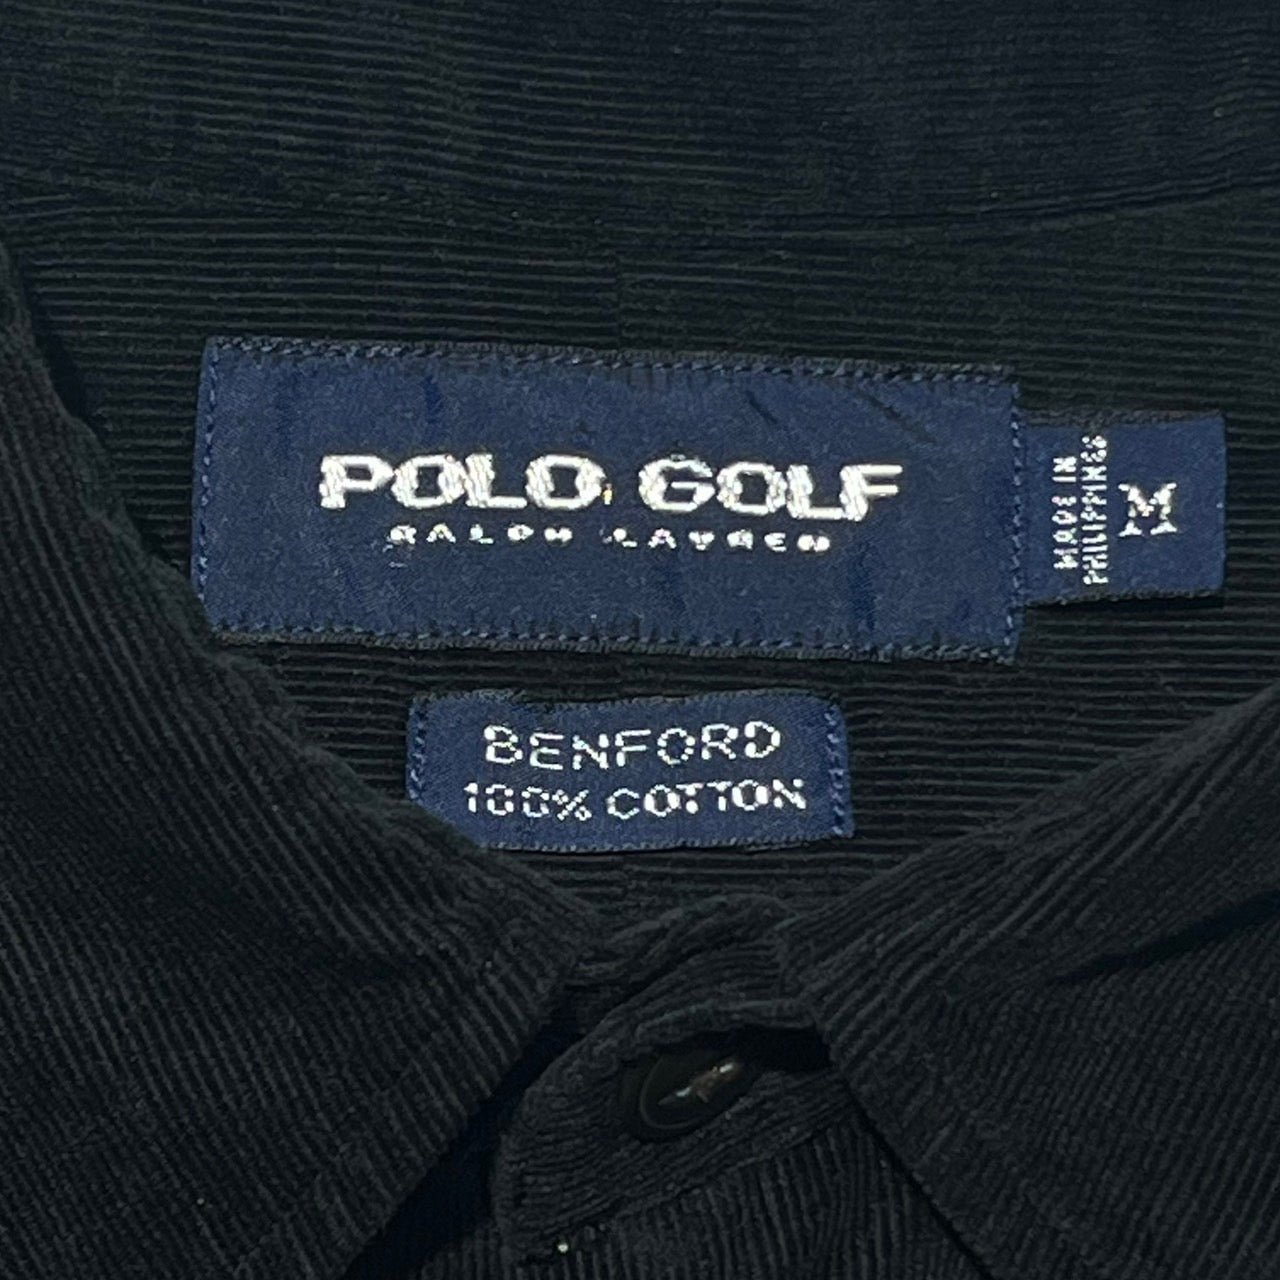 POLO GOLF(ポロゴルフ) 90's 2ポケットエルボーパッチコーデュロイオーバーシャツ/BENFORD M ブラック